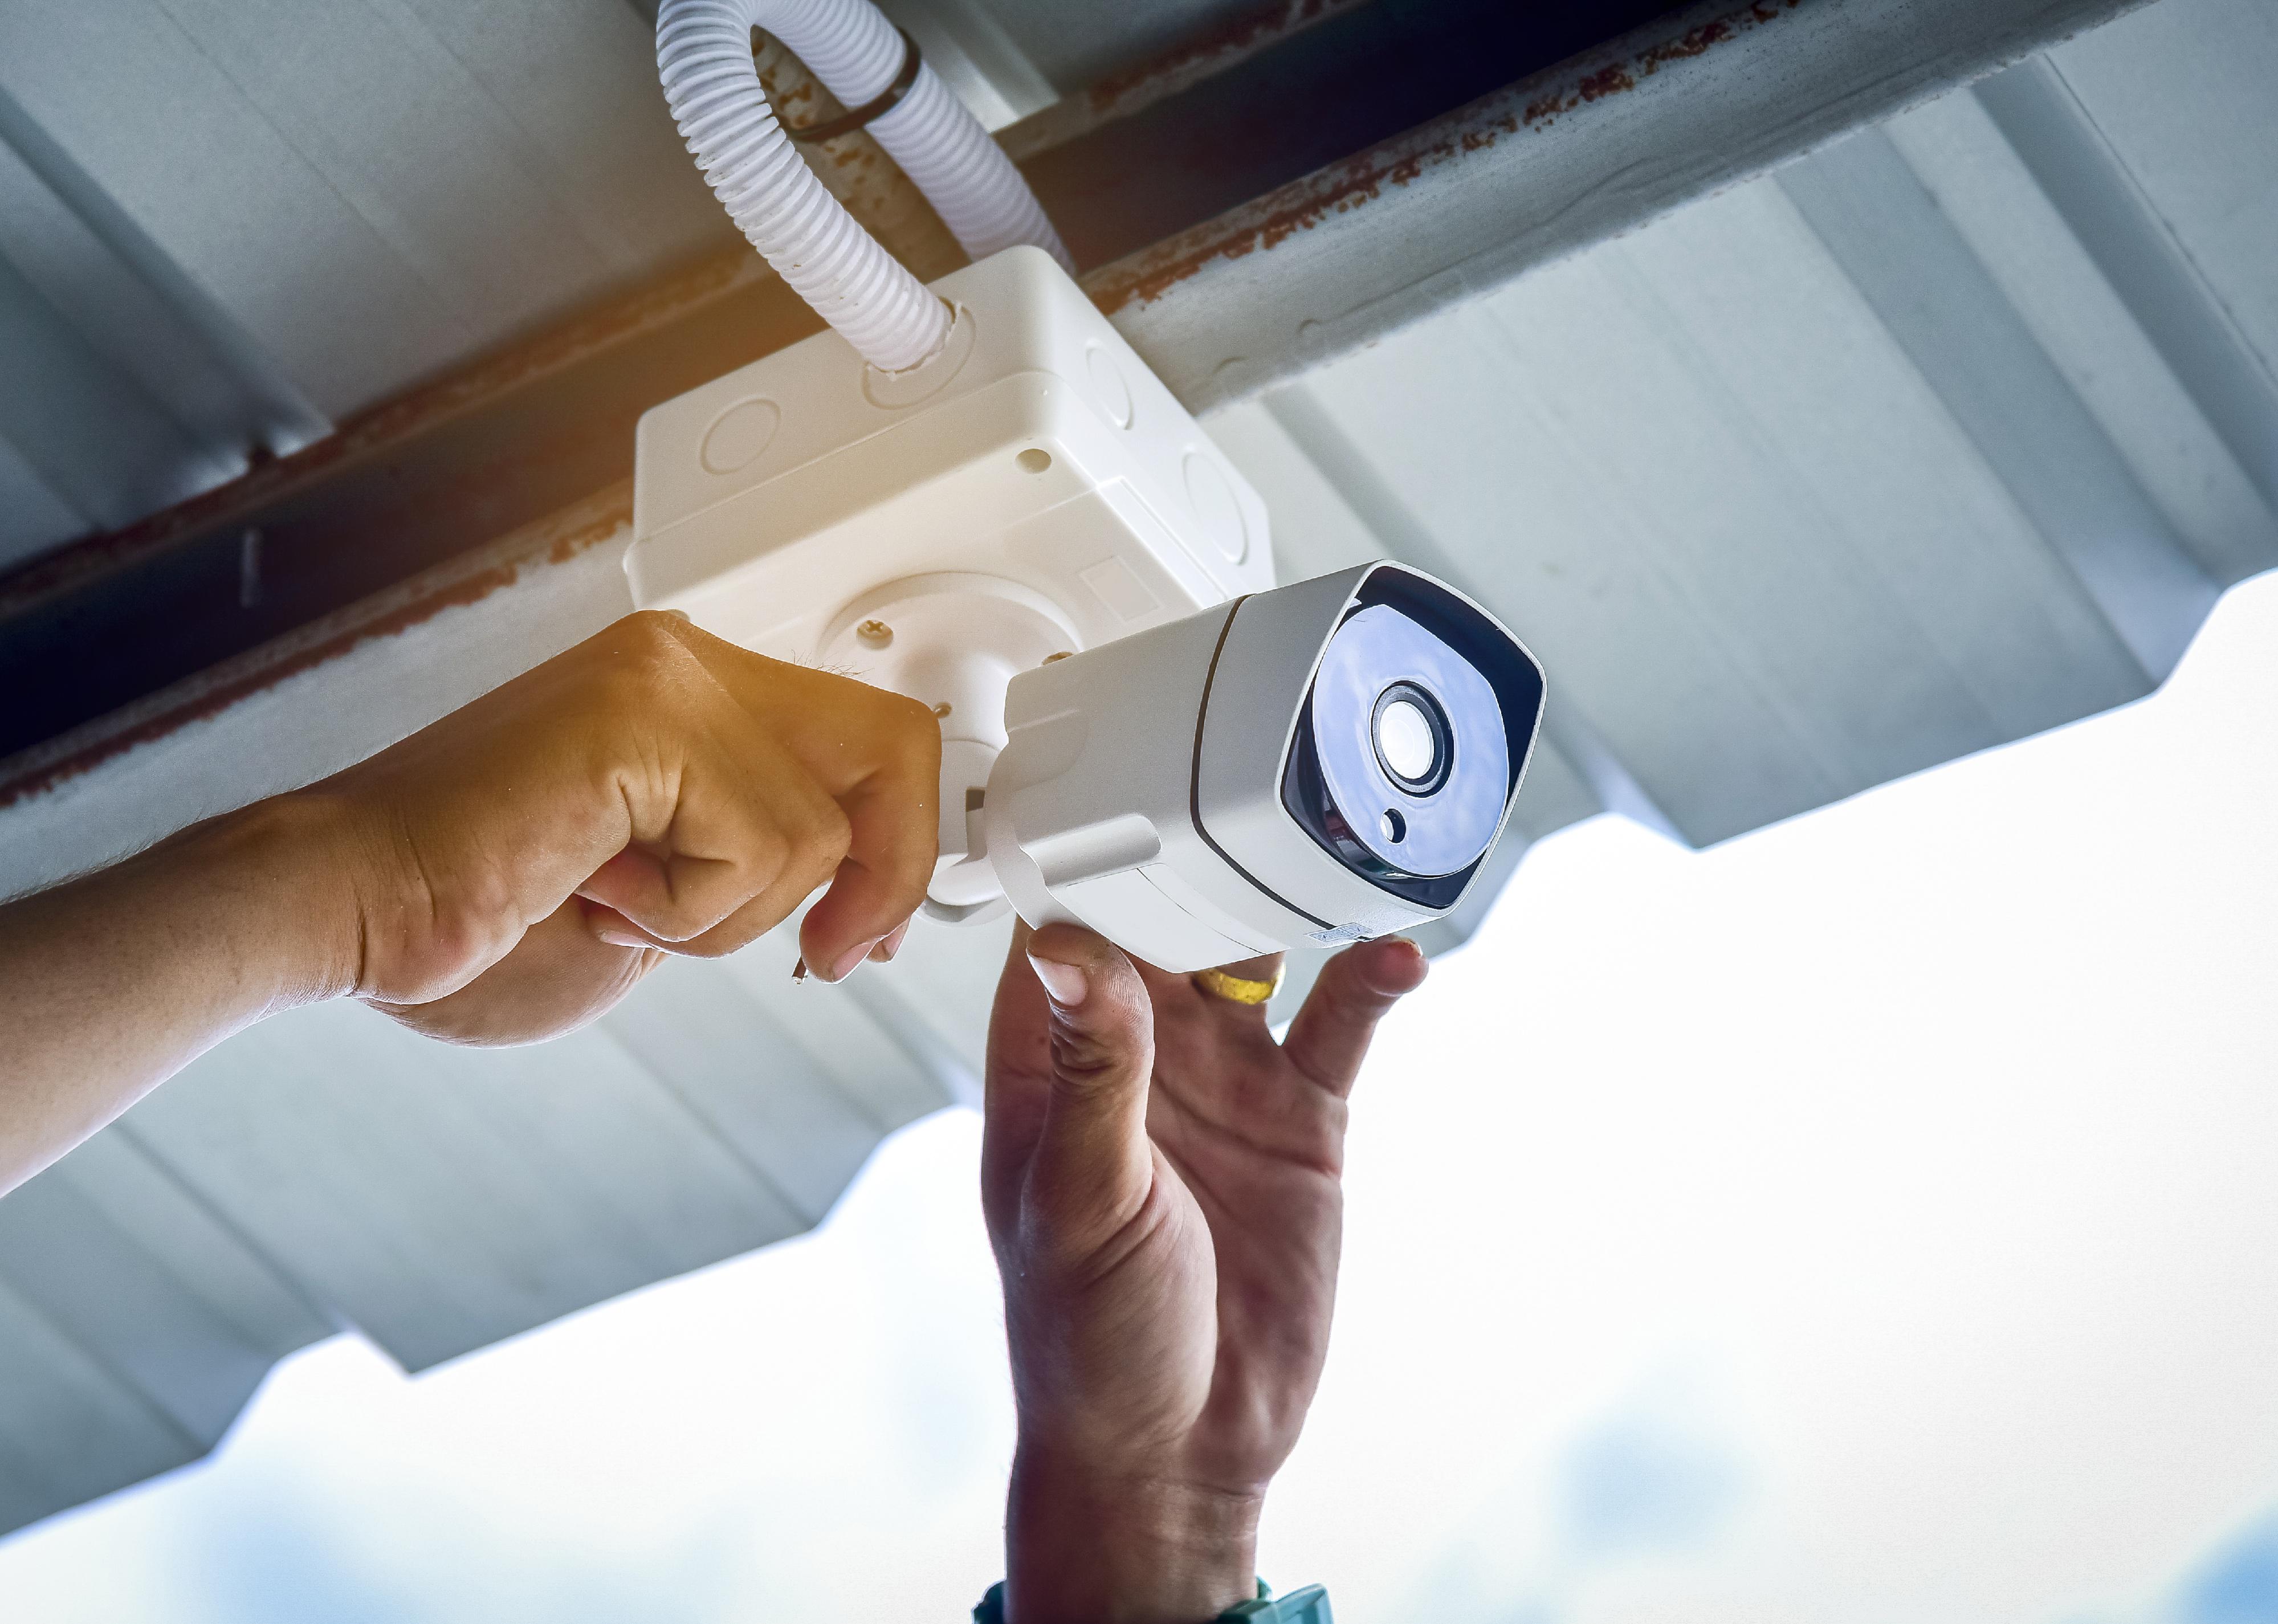 A hand installs a security camera to a rental home